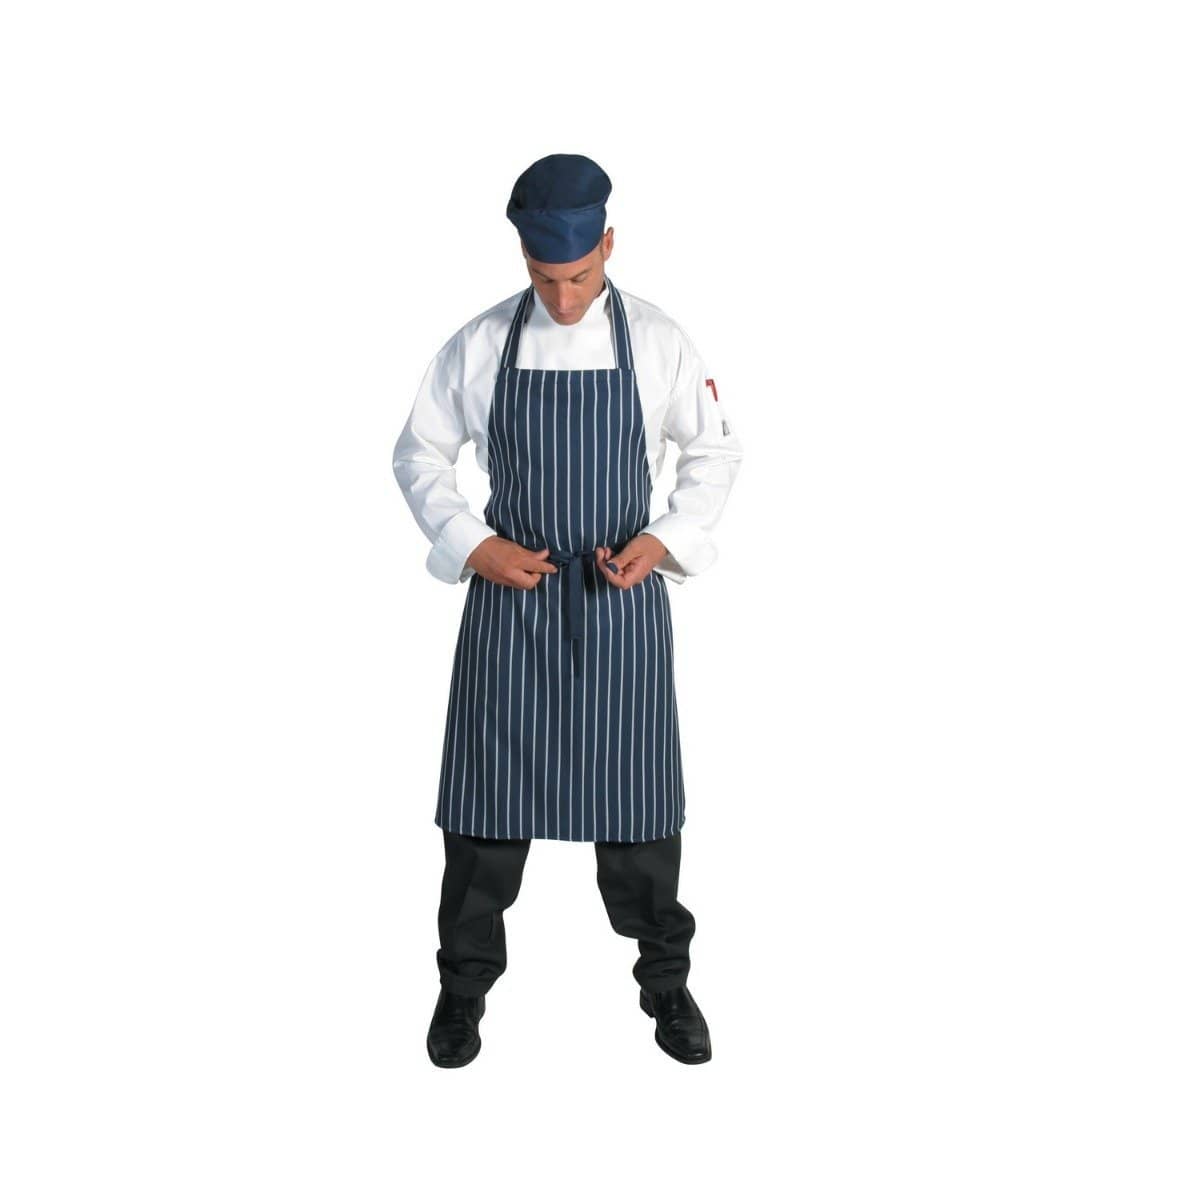 Dnc Workwear Pinstripe Full Bib Apron - No Pocket - 2536 Hospitality & Chefwear DNC Workwear Blue/White 80cm X 86cm 